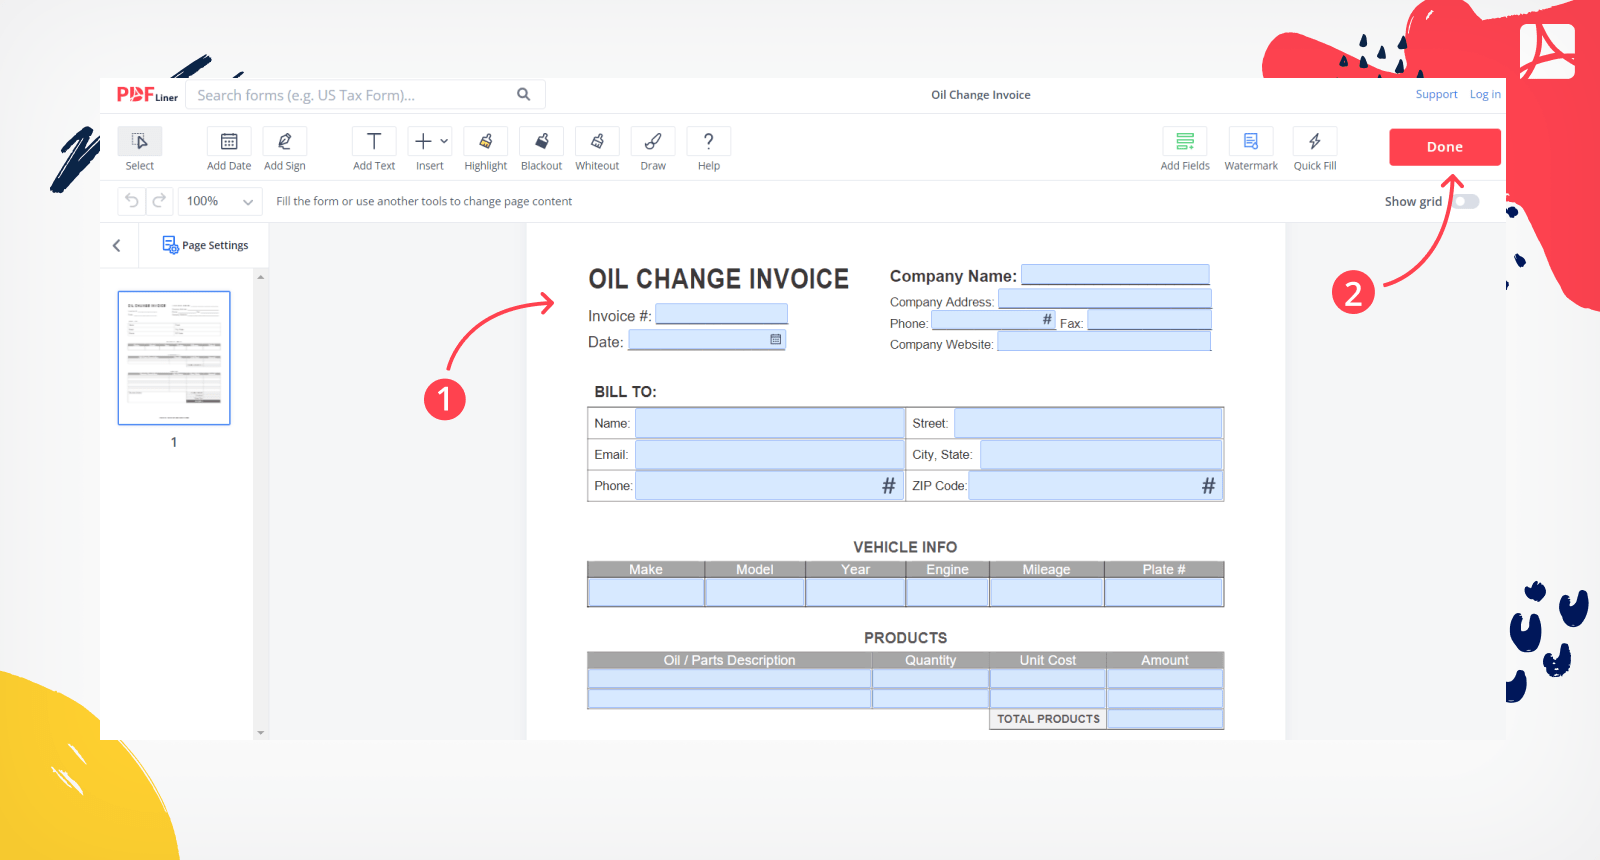 Oil Change Invoice screenshot step 1